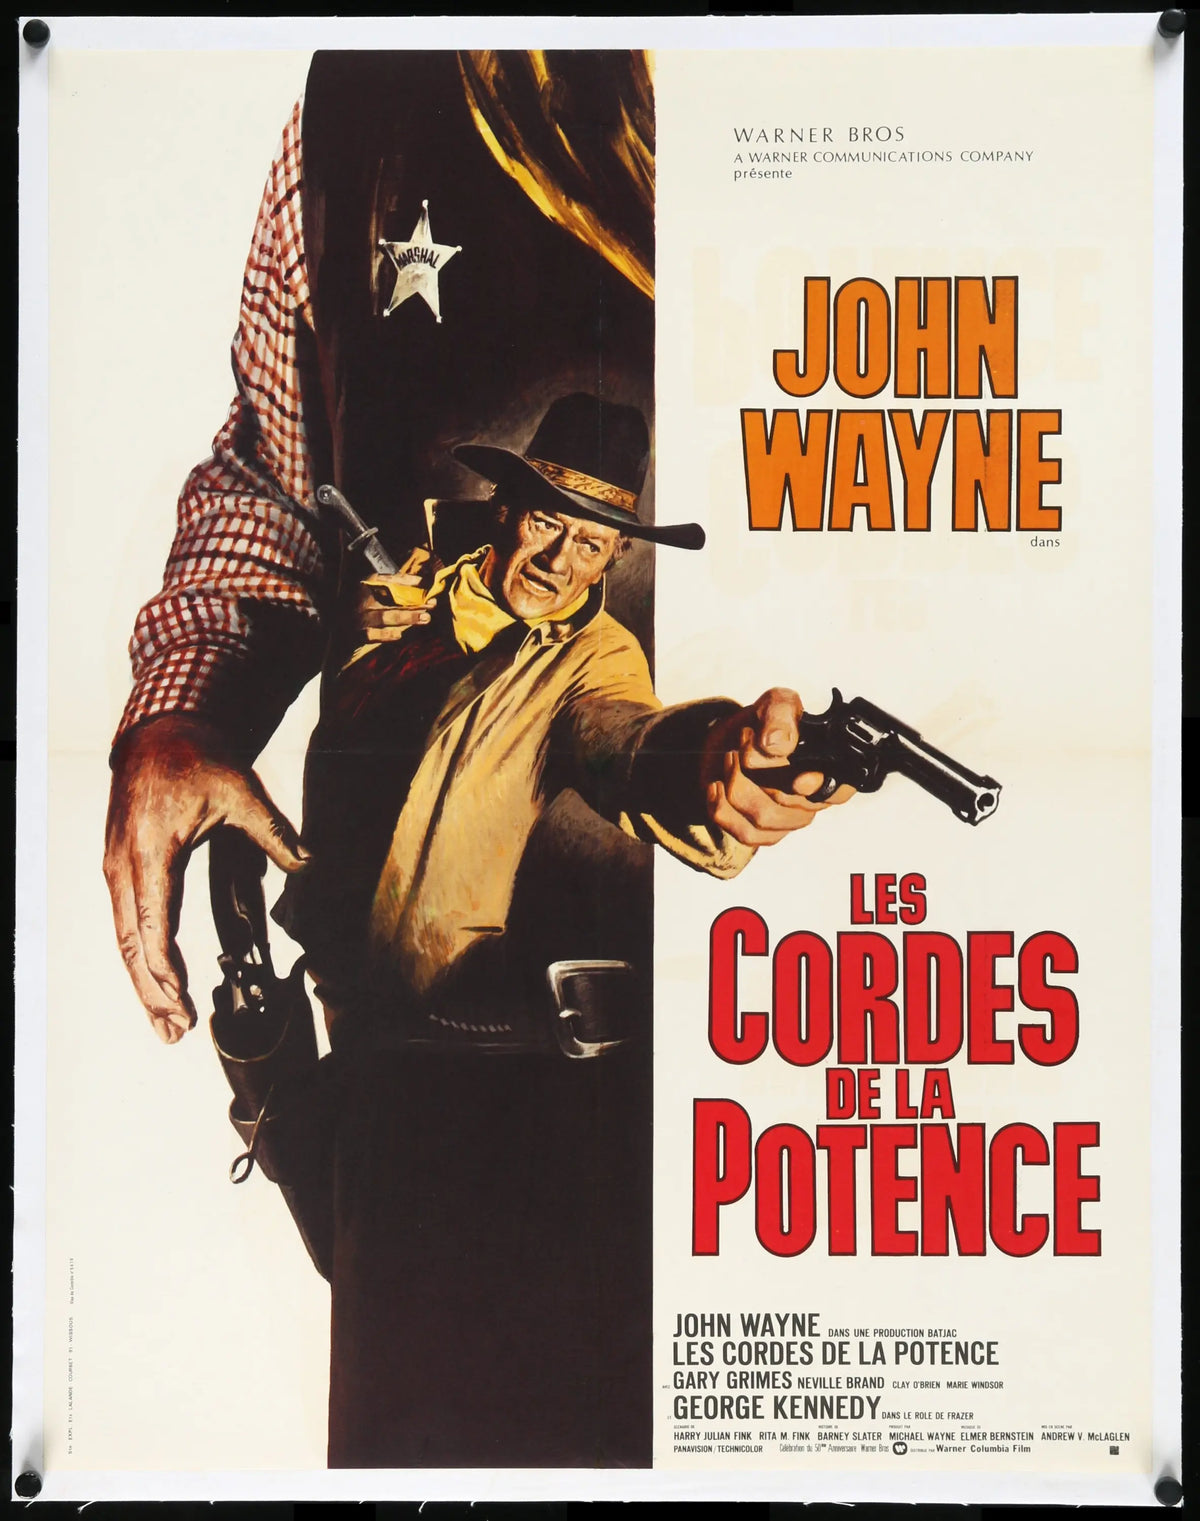 Cahill - United States Marshal (1973) original movie poster for sale at Original Film Art